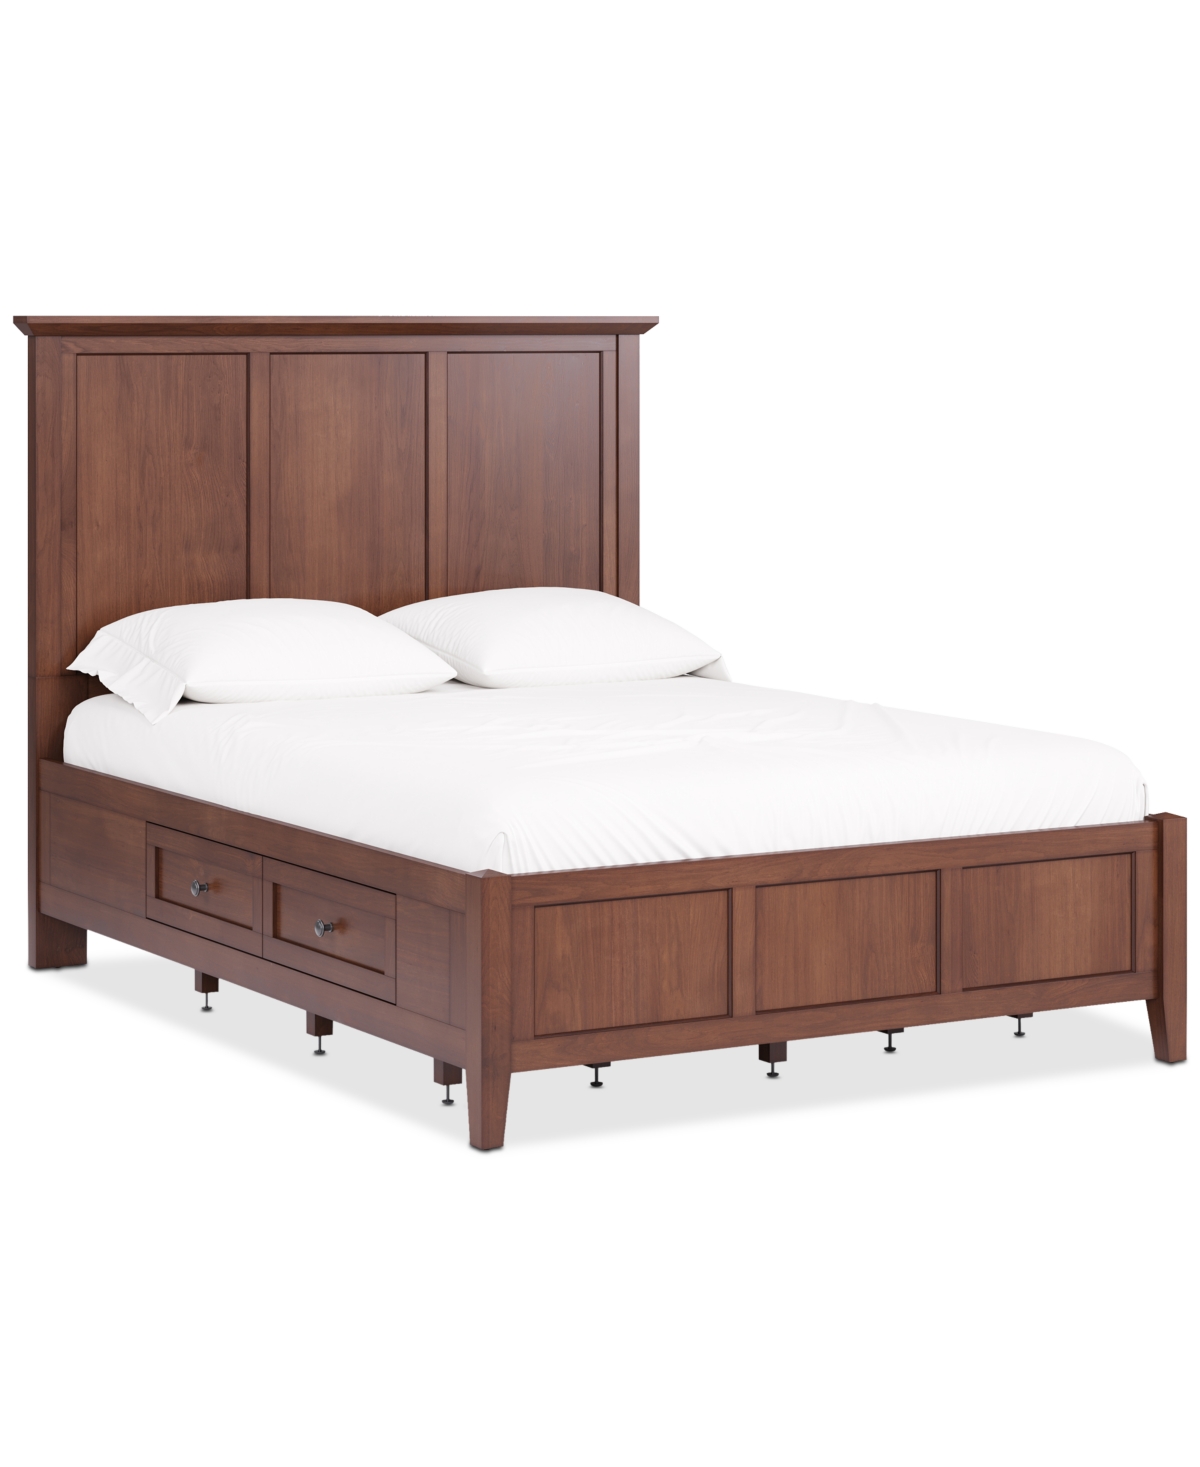 Furniture Hedworth King Storage Bed In Brown